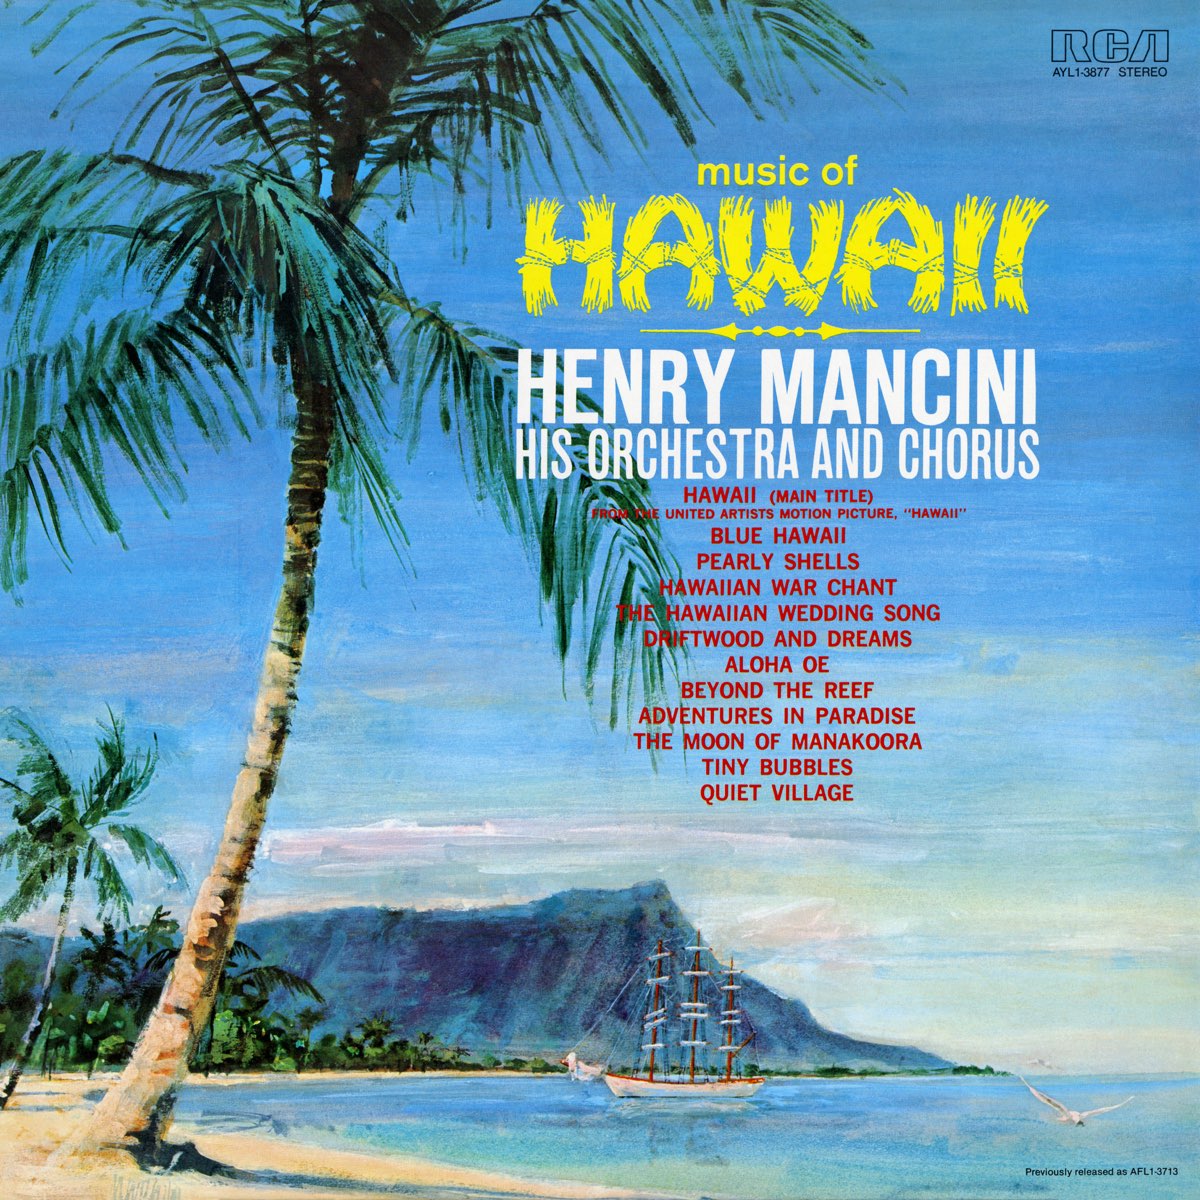 Music of Hawaii – Album von Henry Mancini & His Orchestra and Chorus –  Apple Music